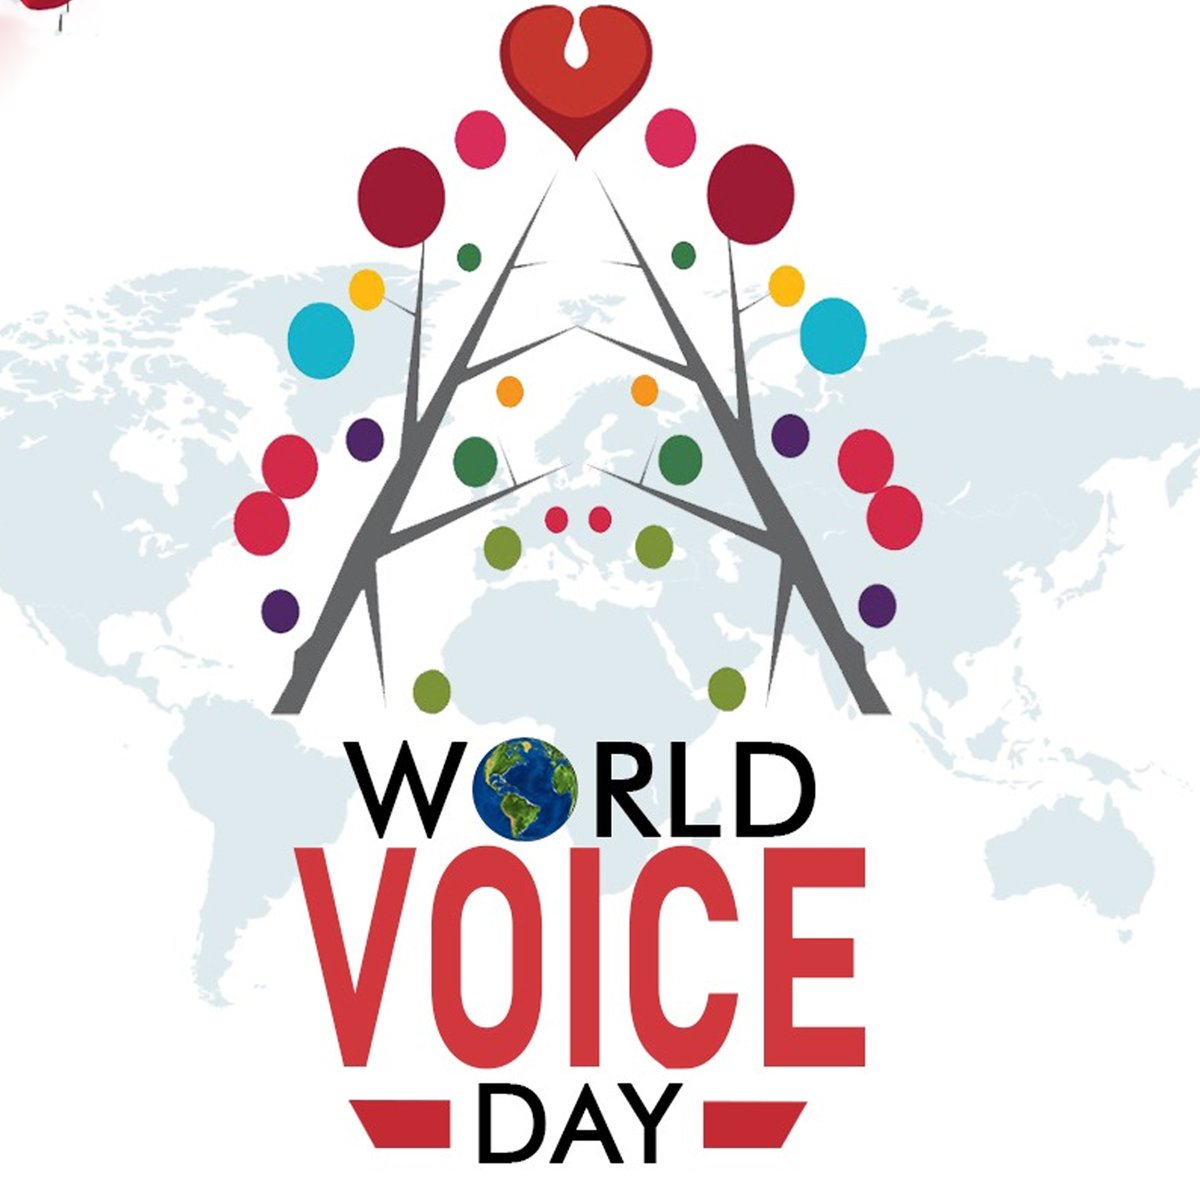 World Voice Day....
#happyVoiceDay #Greetings #VoiceDay #Singers #Actors #Speechers #realcinemas2007